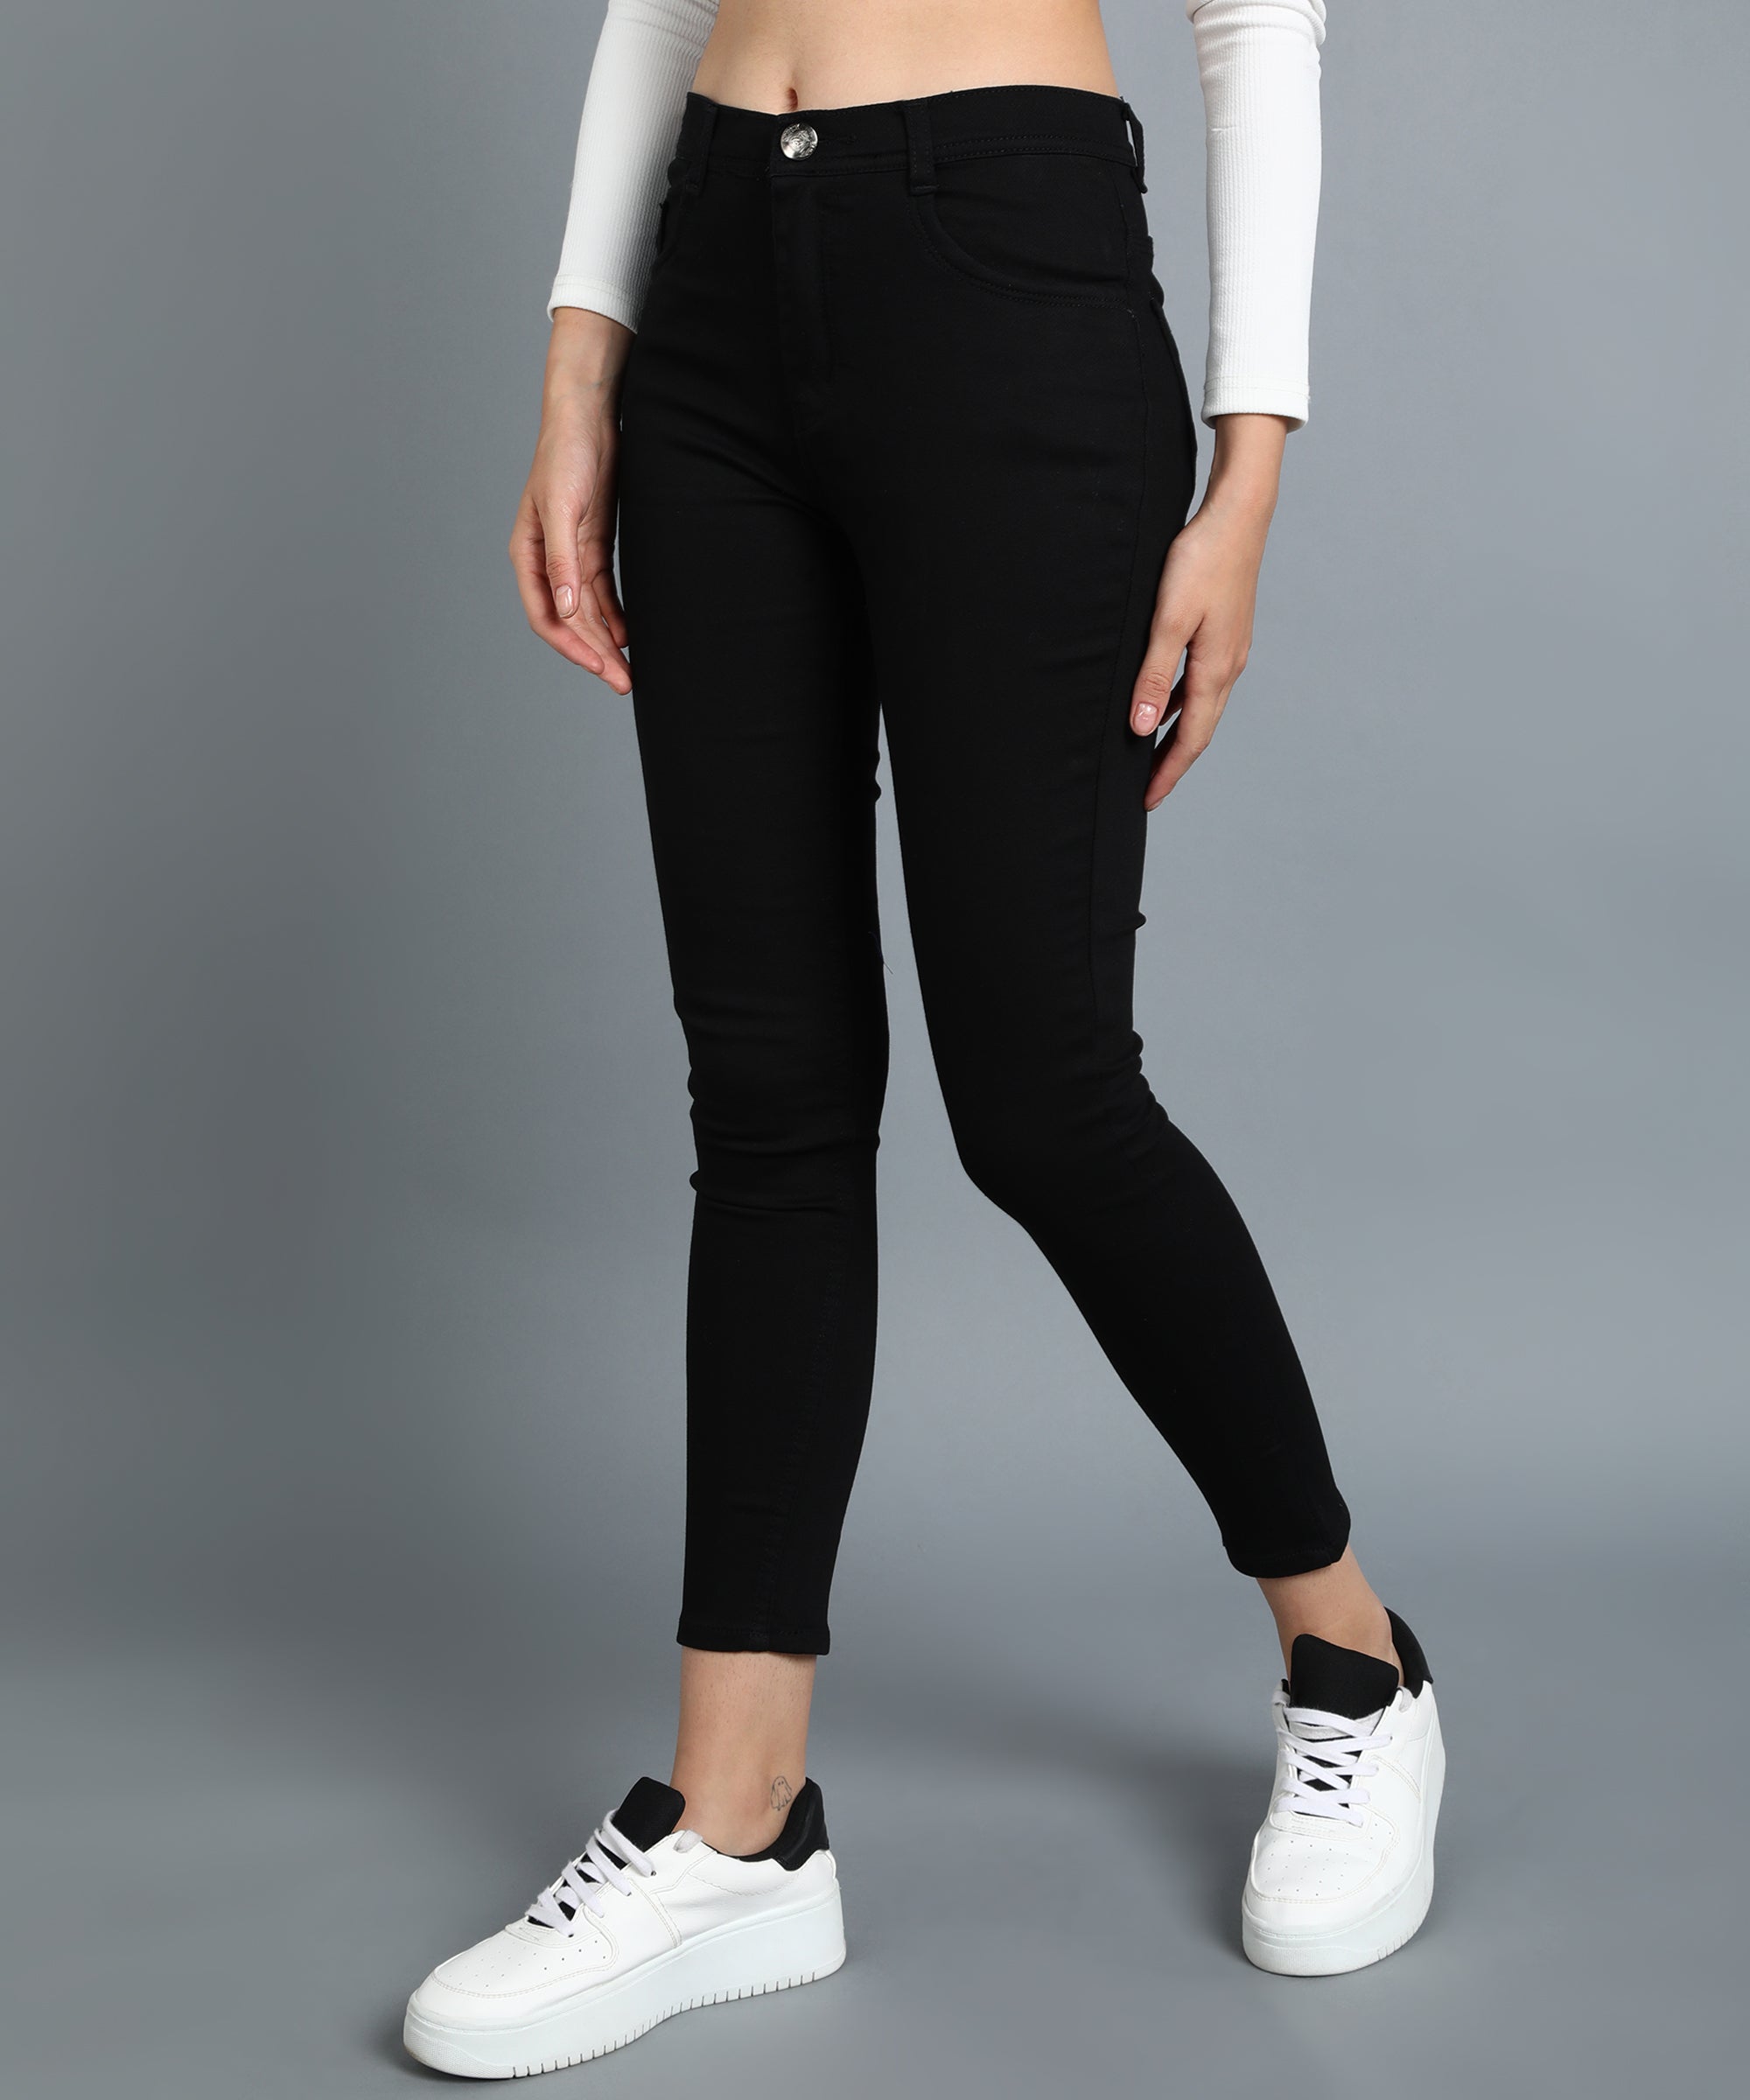 Buy Girls Black Regular Fit Jeans Online  745935  Allen Solly